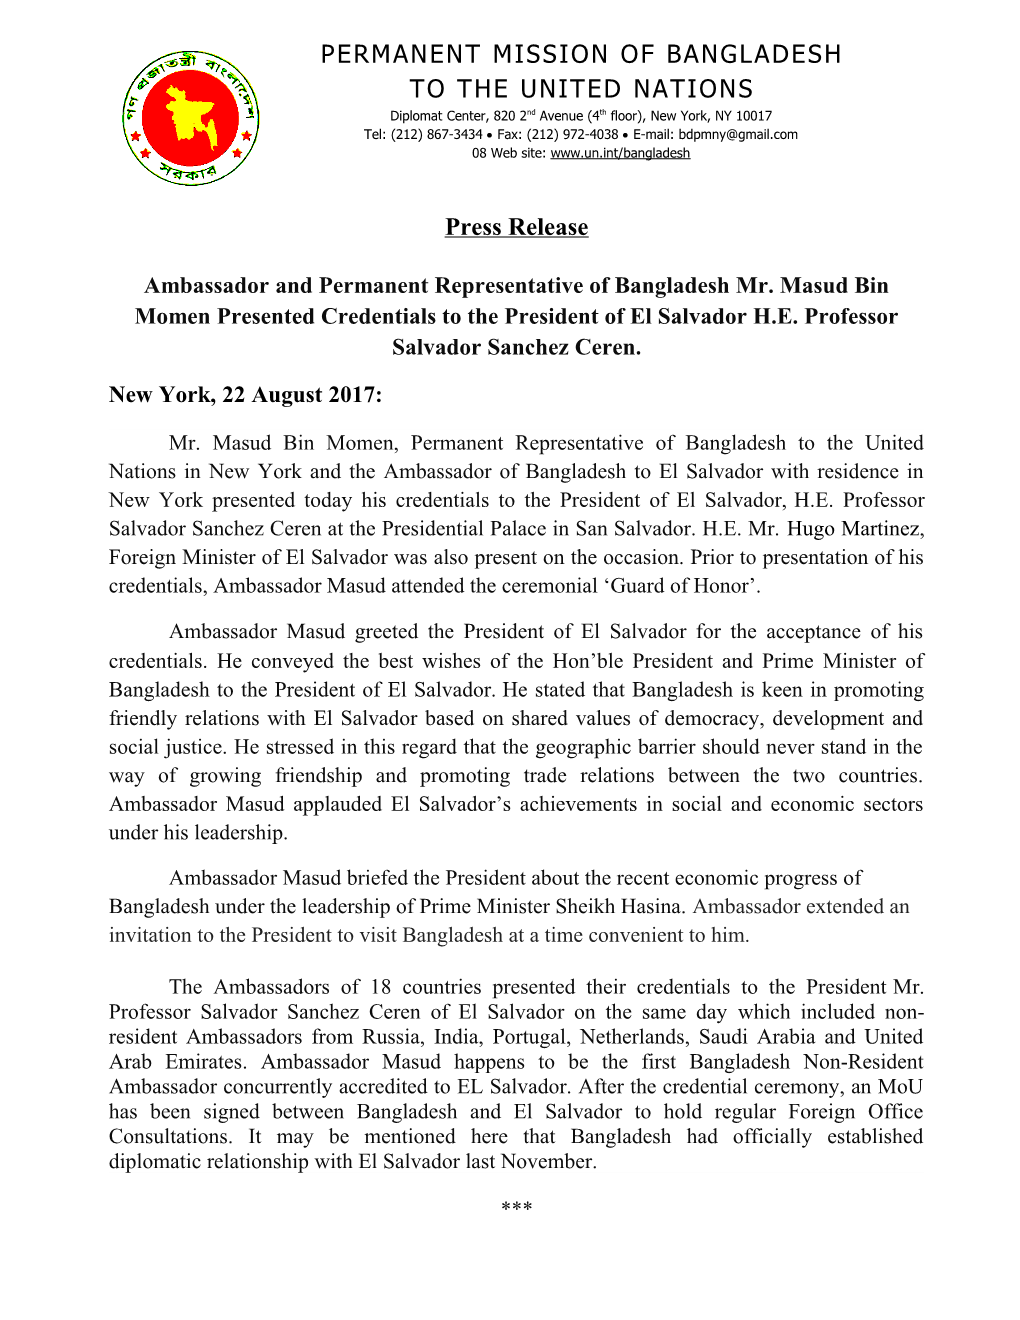 Ambassador and Permanent Representative of Bangladesh Mr. Masud Bin Momen Presented Credentials